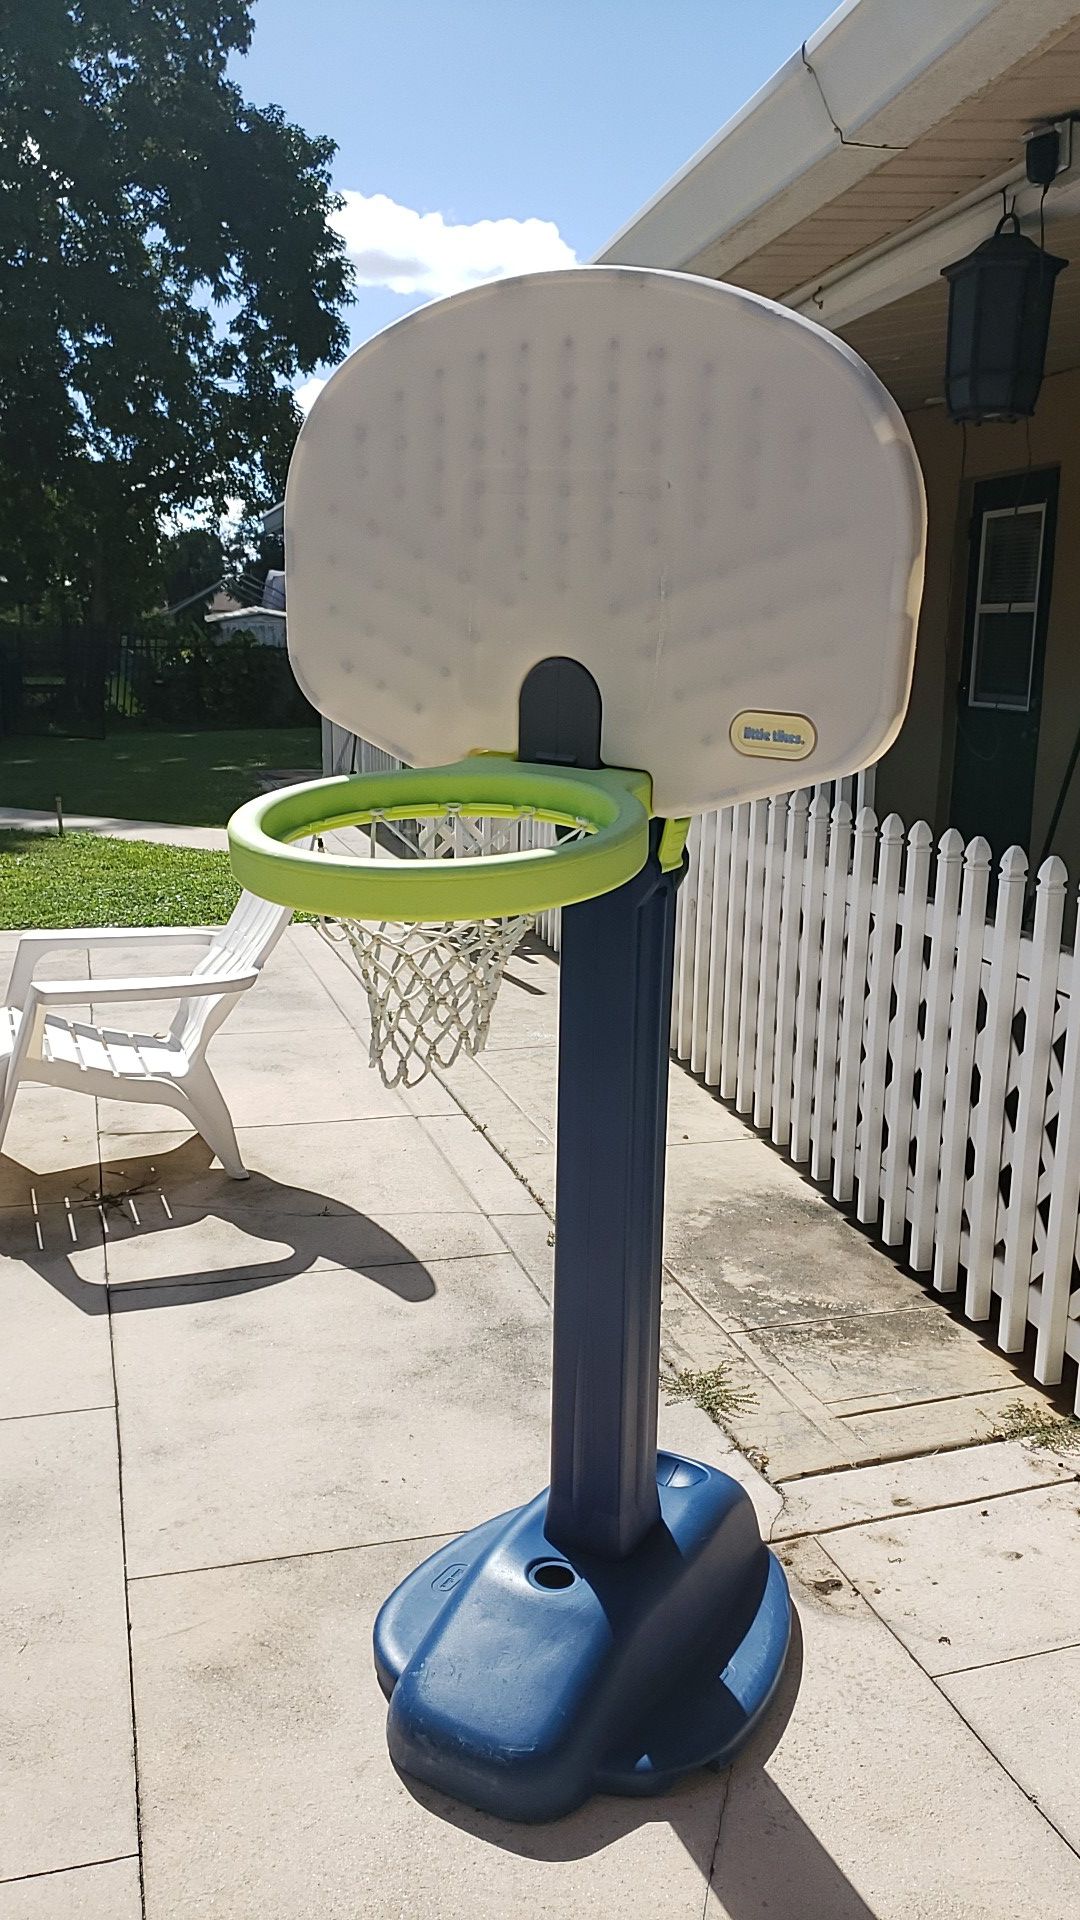 Little Tykes basketball hoop